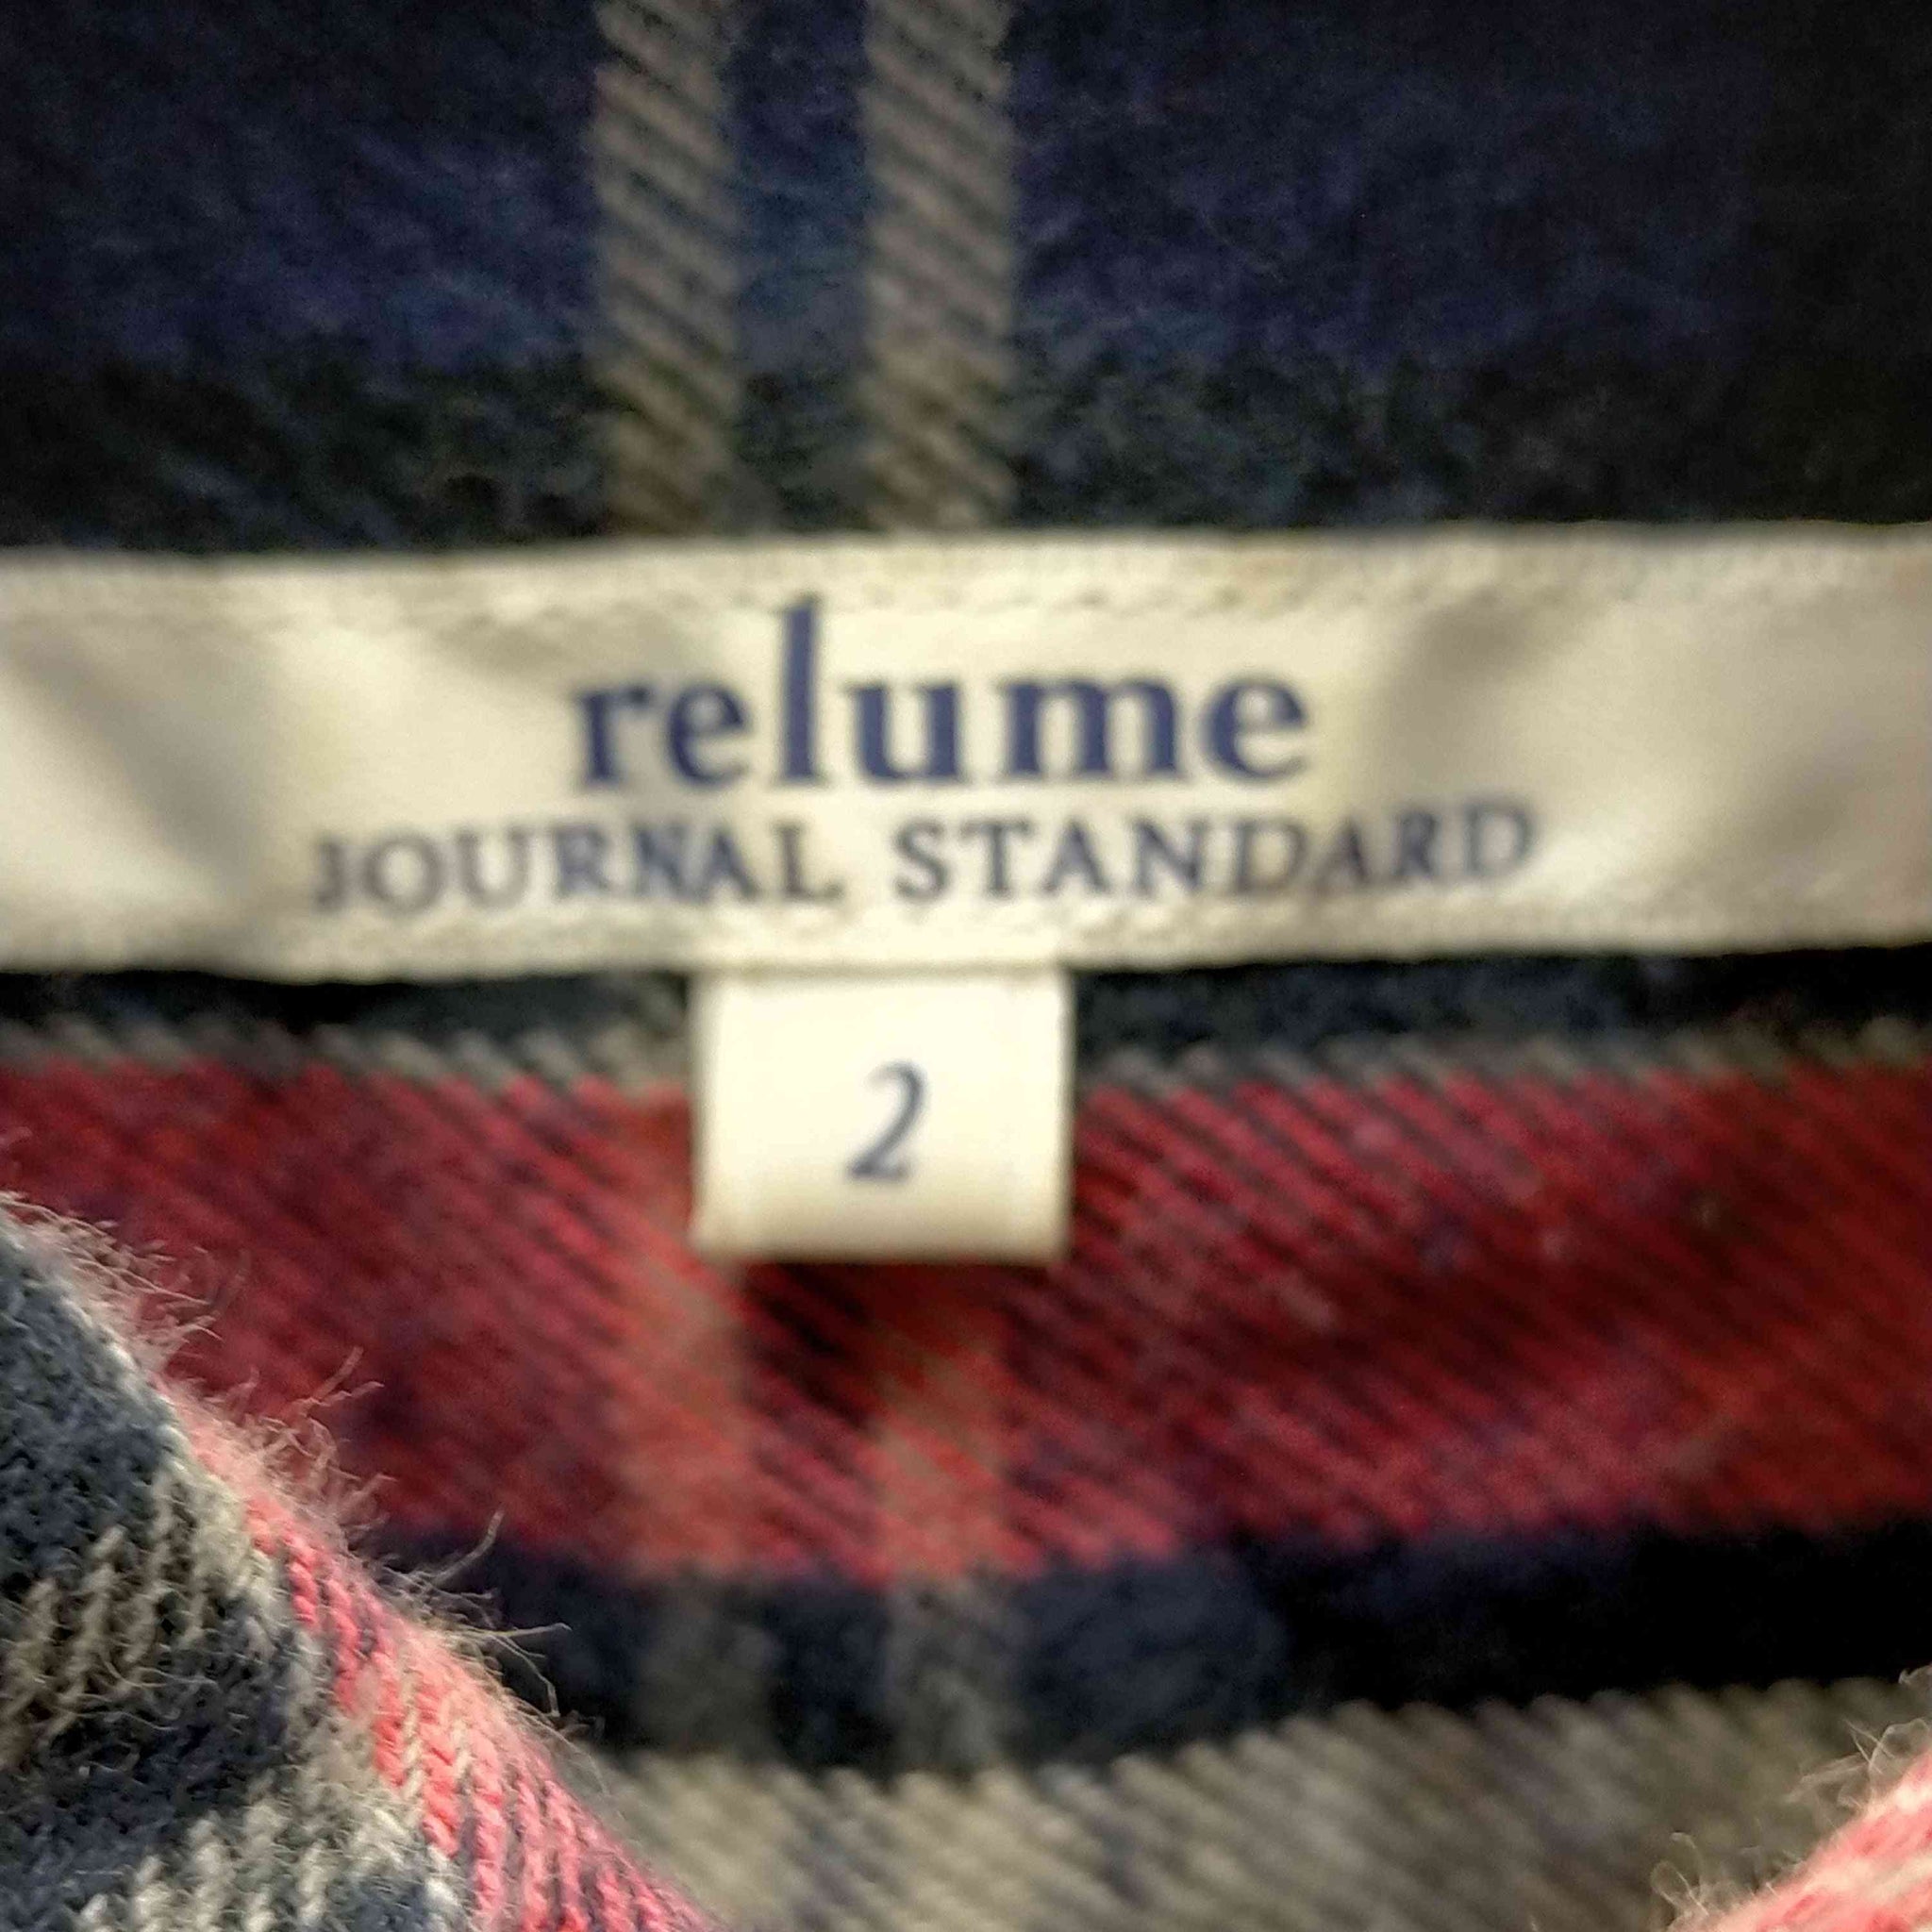 JOURNAL STANDARD relume(ジャーナルスタンダードレリューム)チェック柄レギュラーシャツ